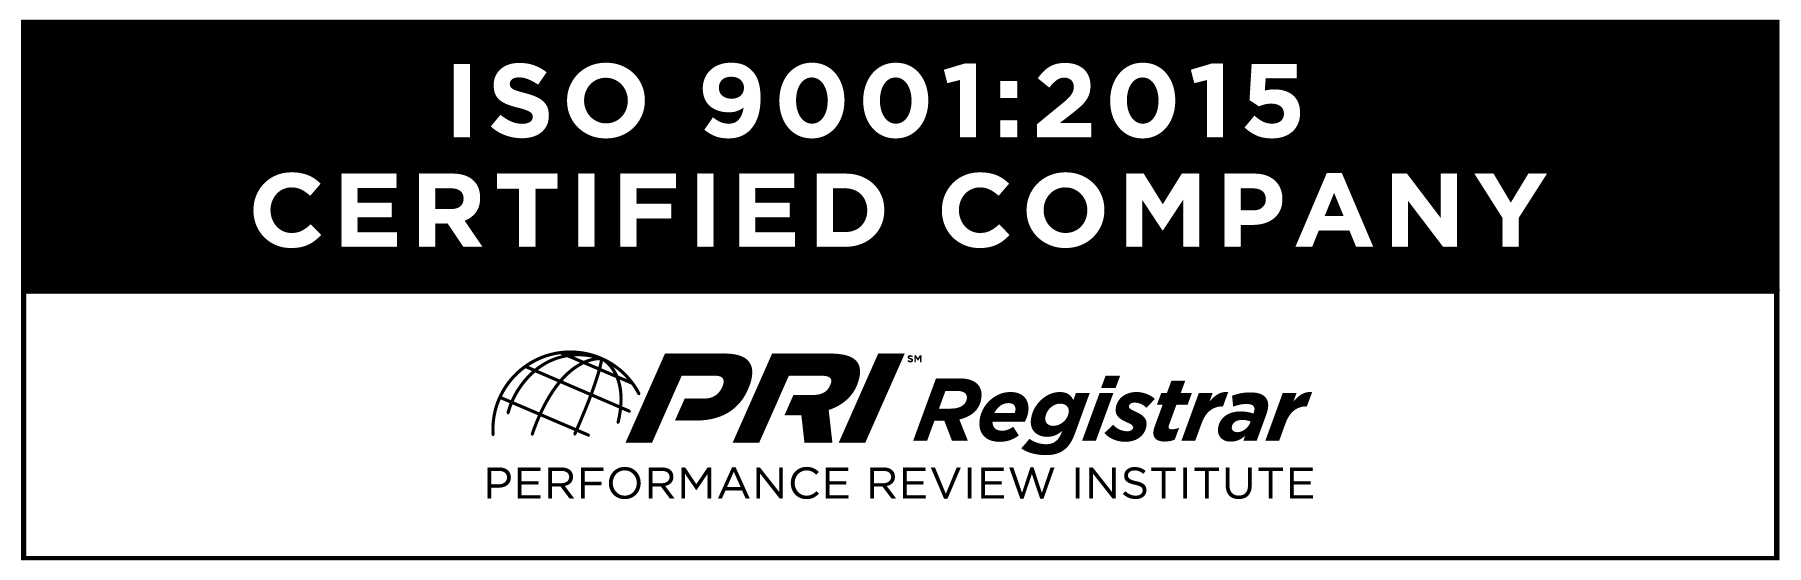 ISO 9001:2015 Certified Company | PRI Registrar Performance Review Institute